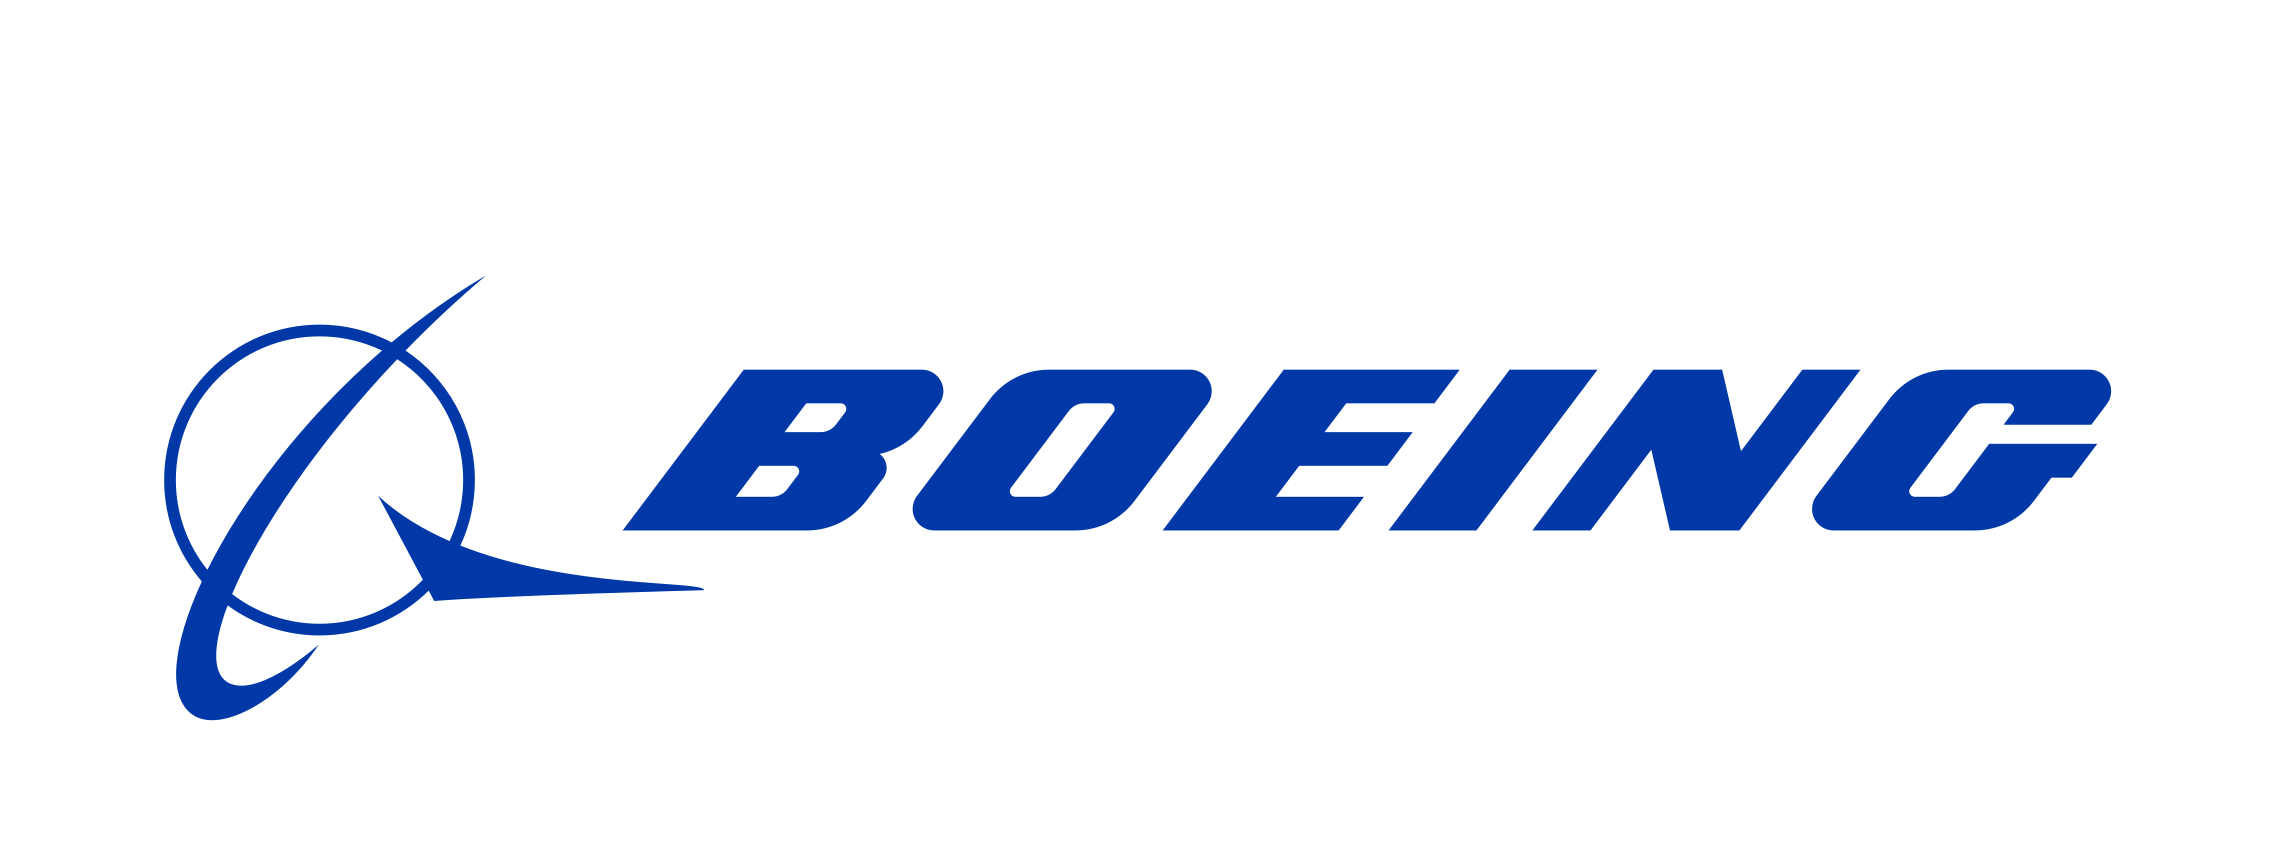 Boeing Wave Analysis – 22 January, 2020